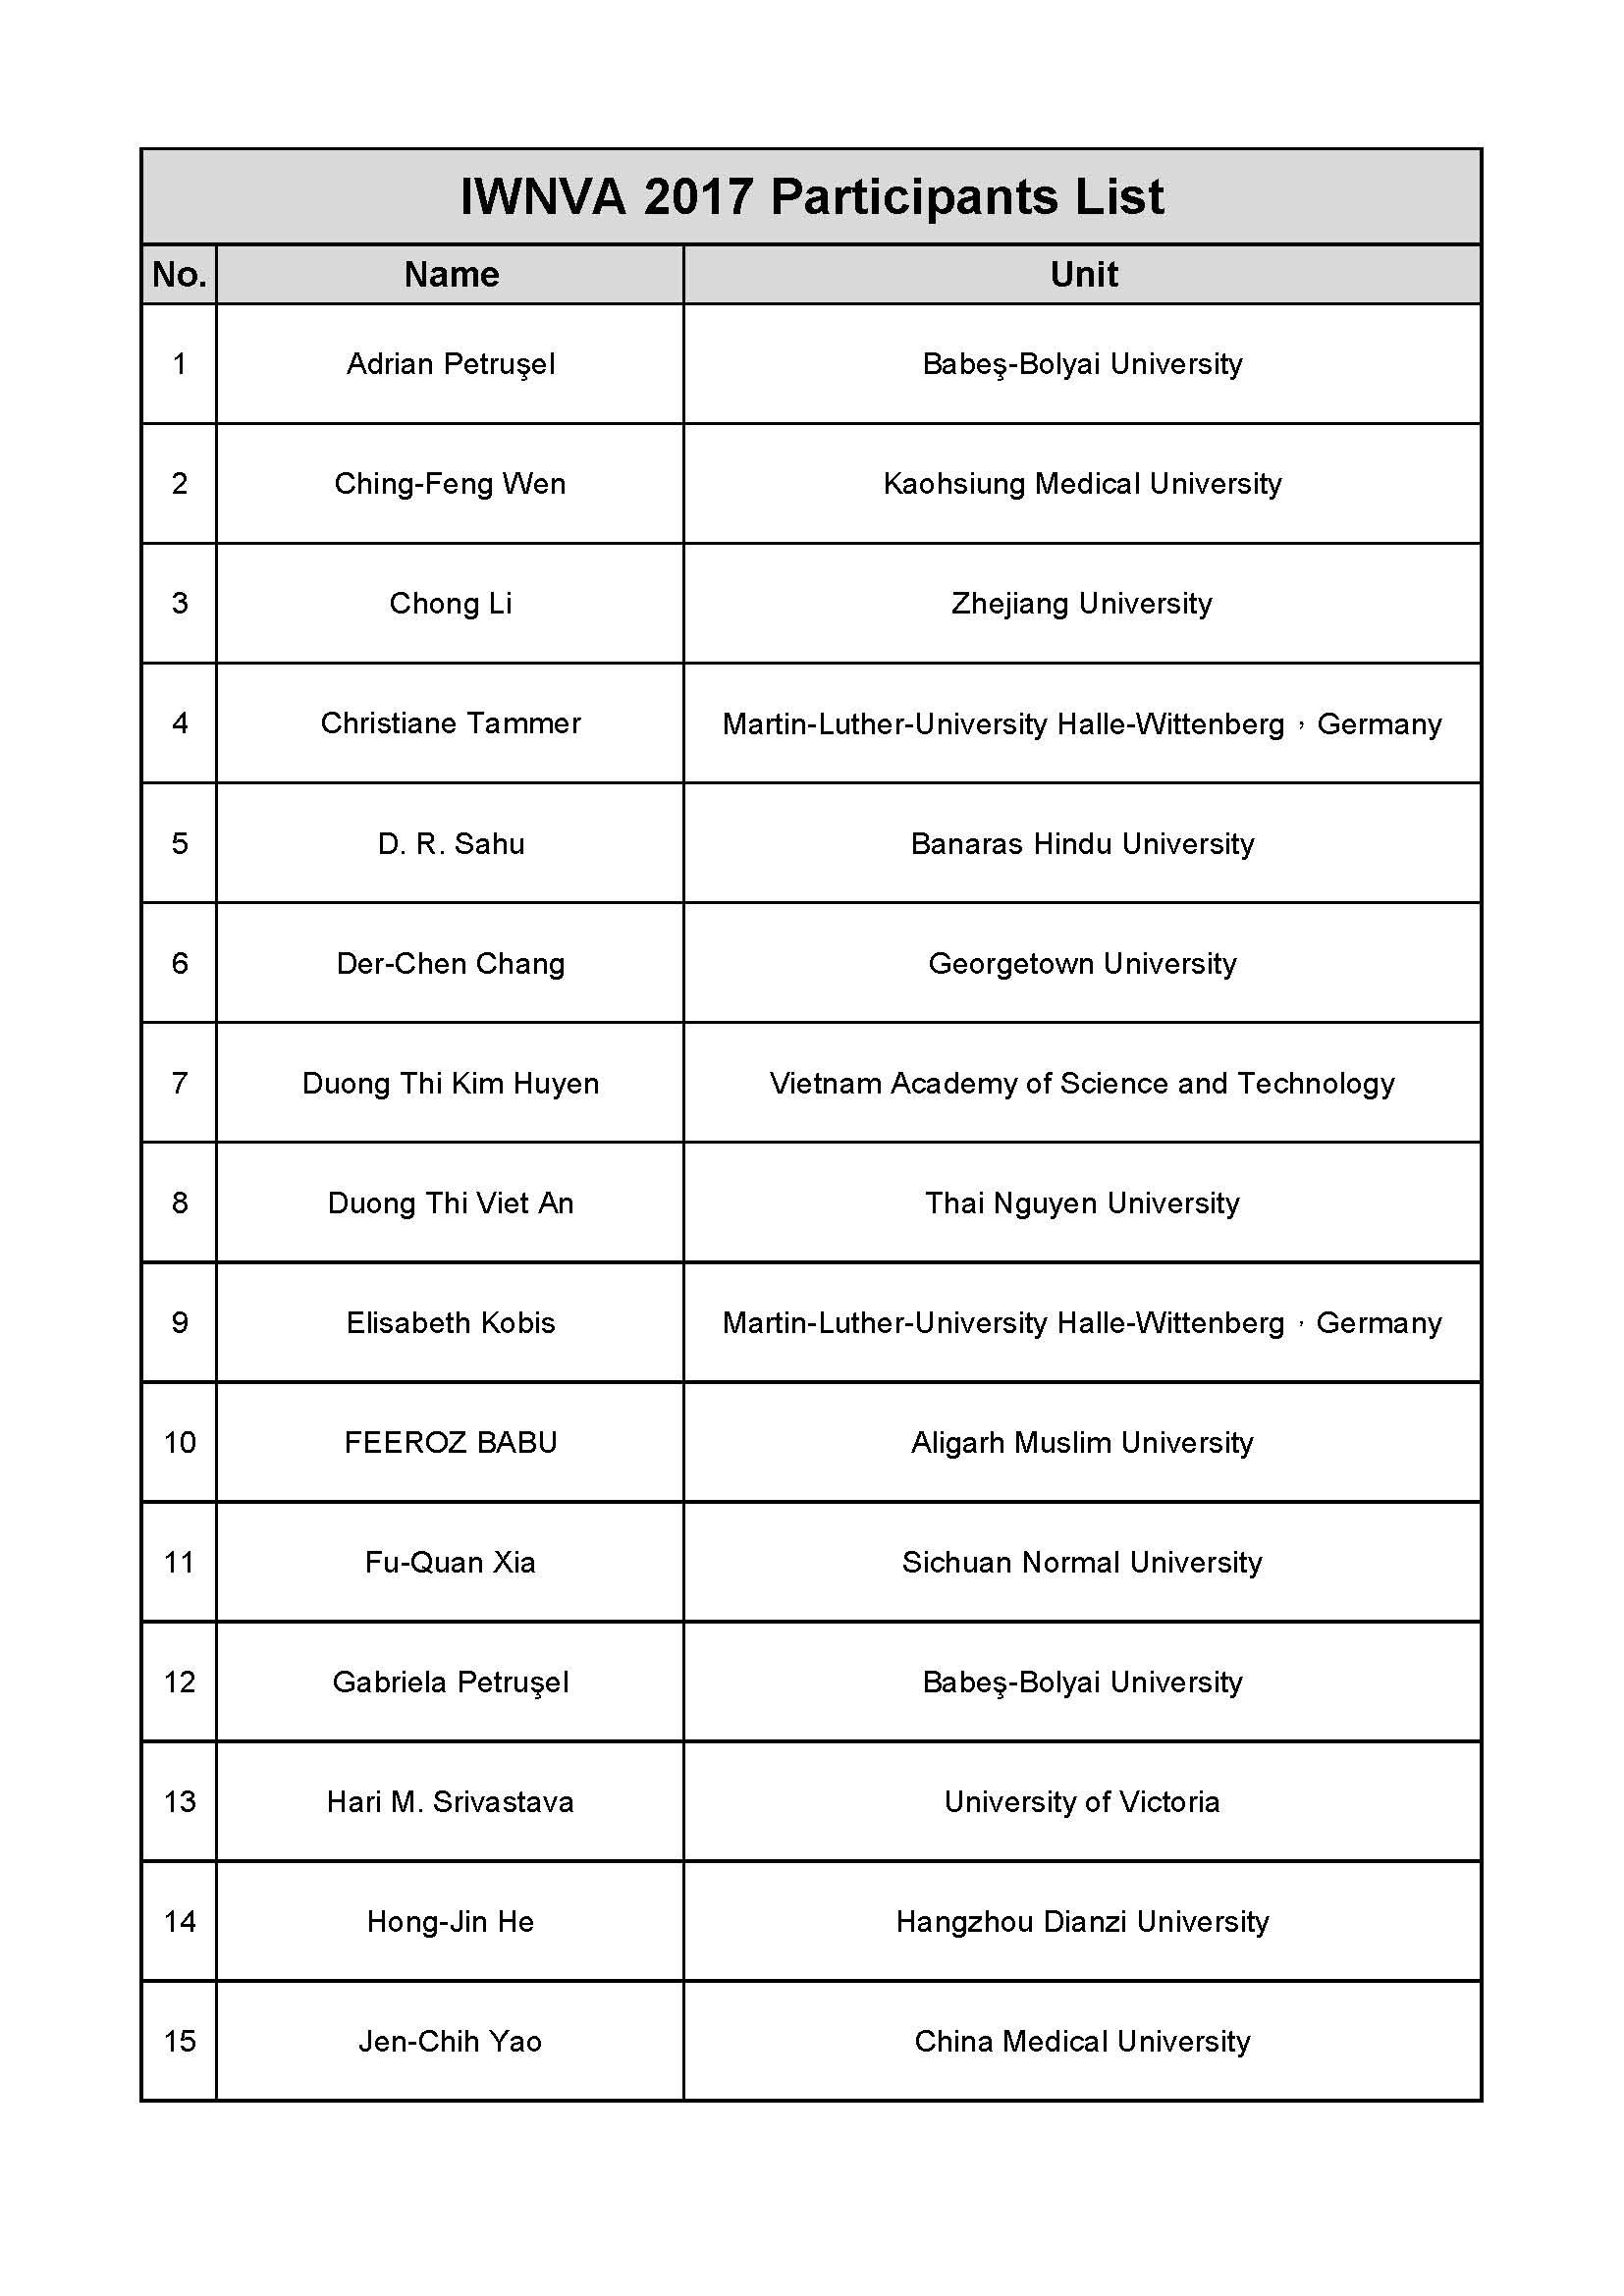 IWNVA 2017 Participants List 1